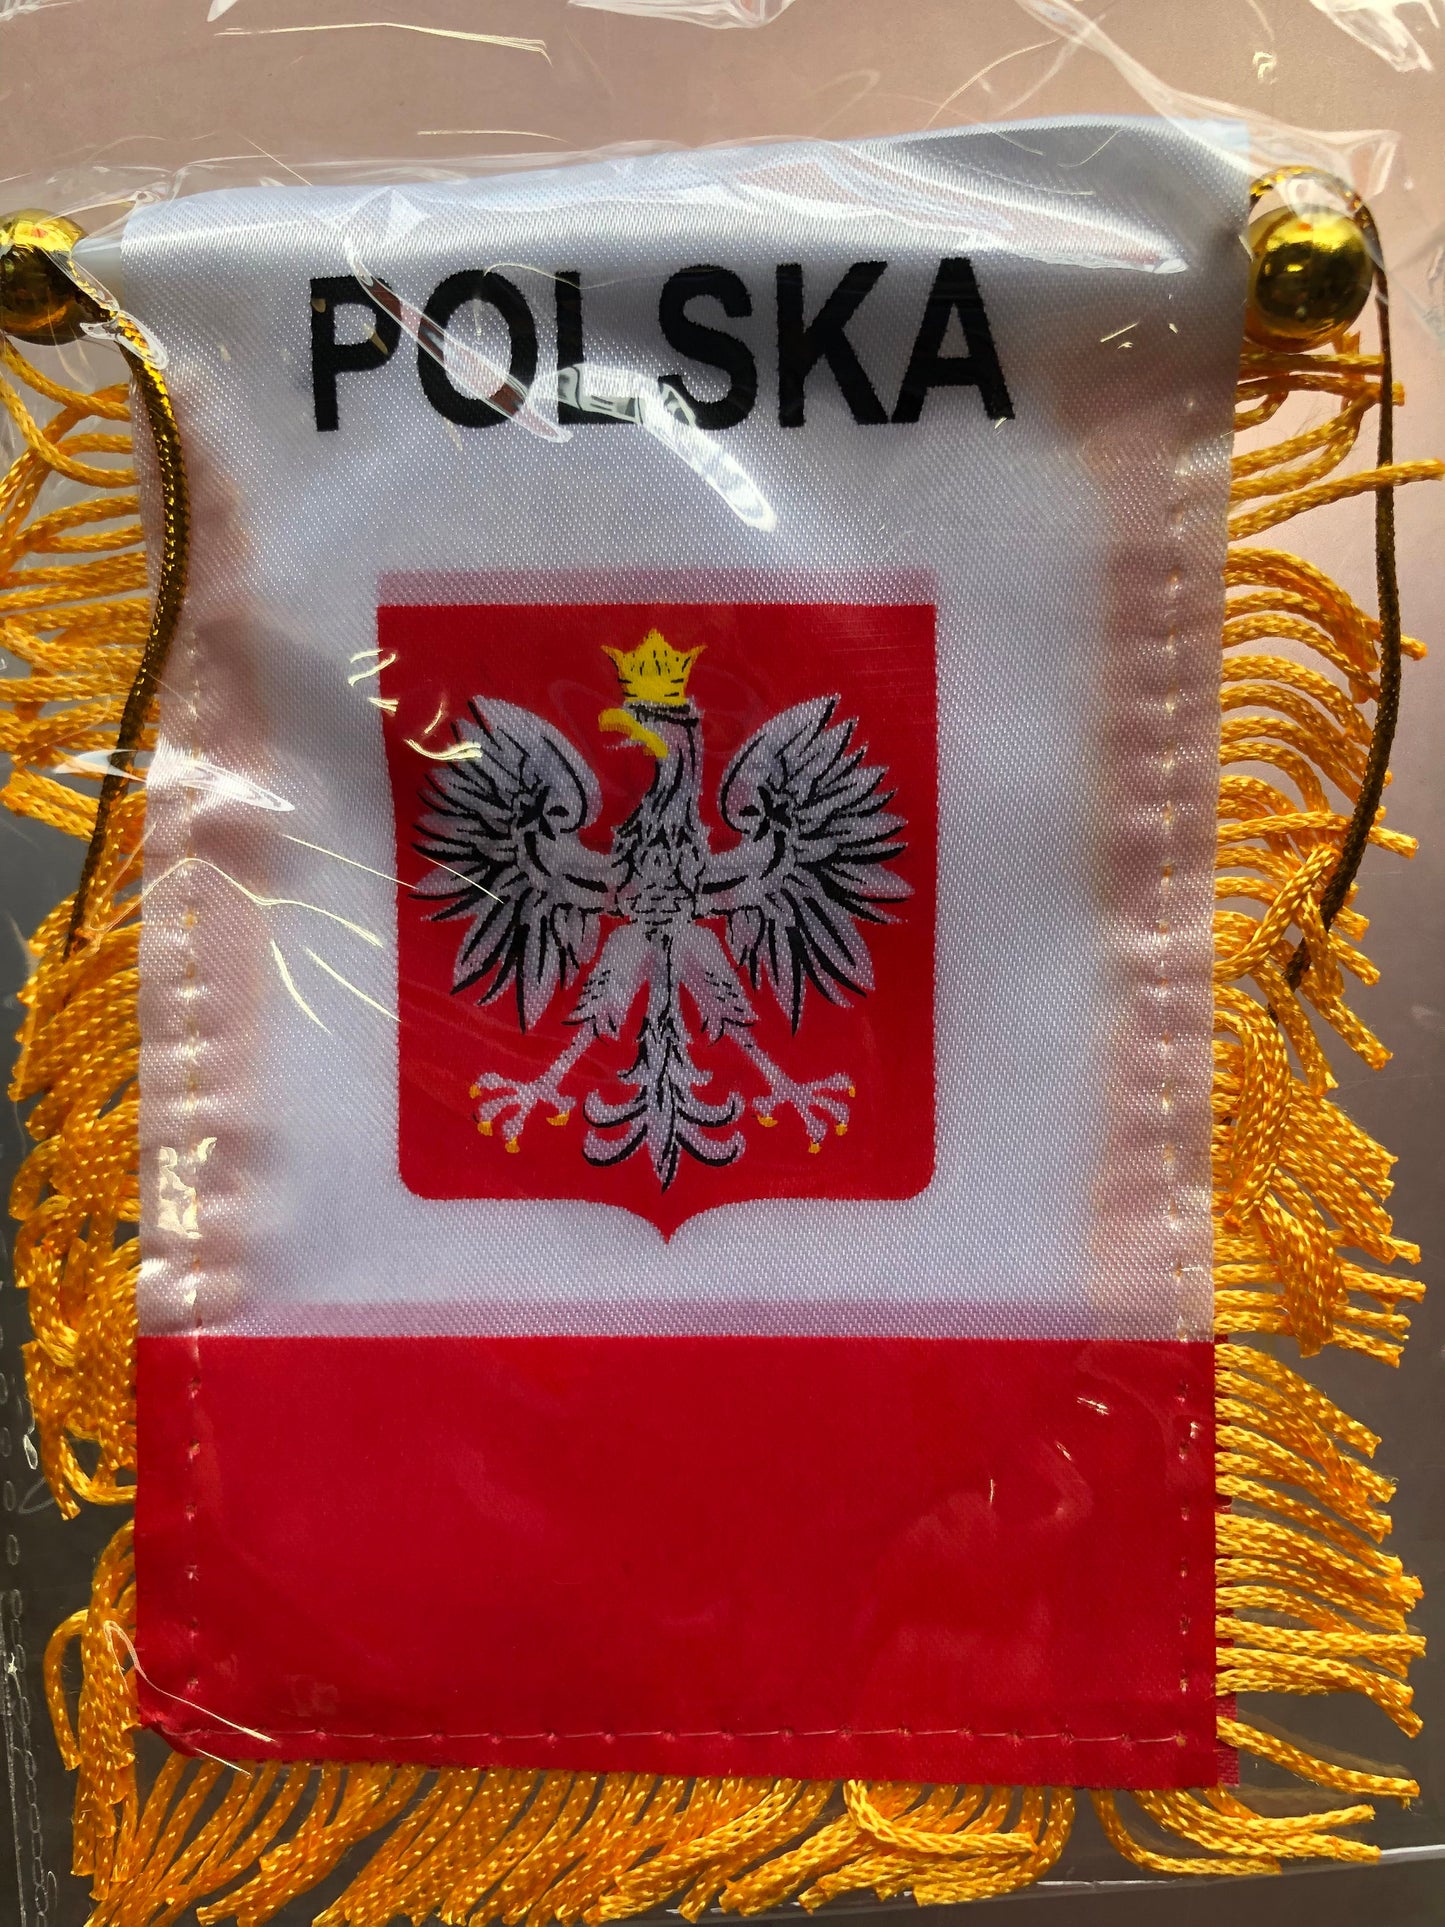 Bulk of Poland Polish Polska banner mini flag w/ suction cup car window hanger 4"x6"in 12 Pack